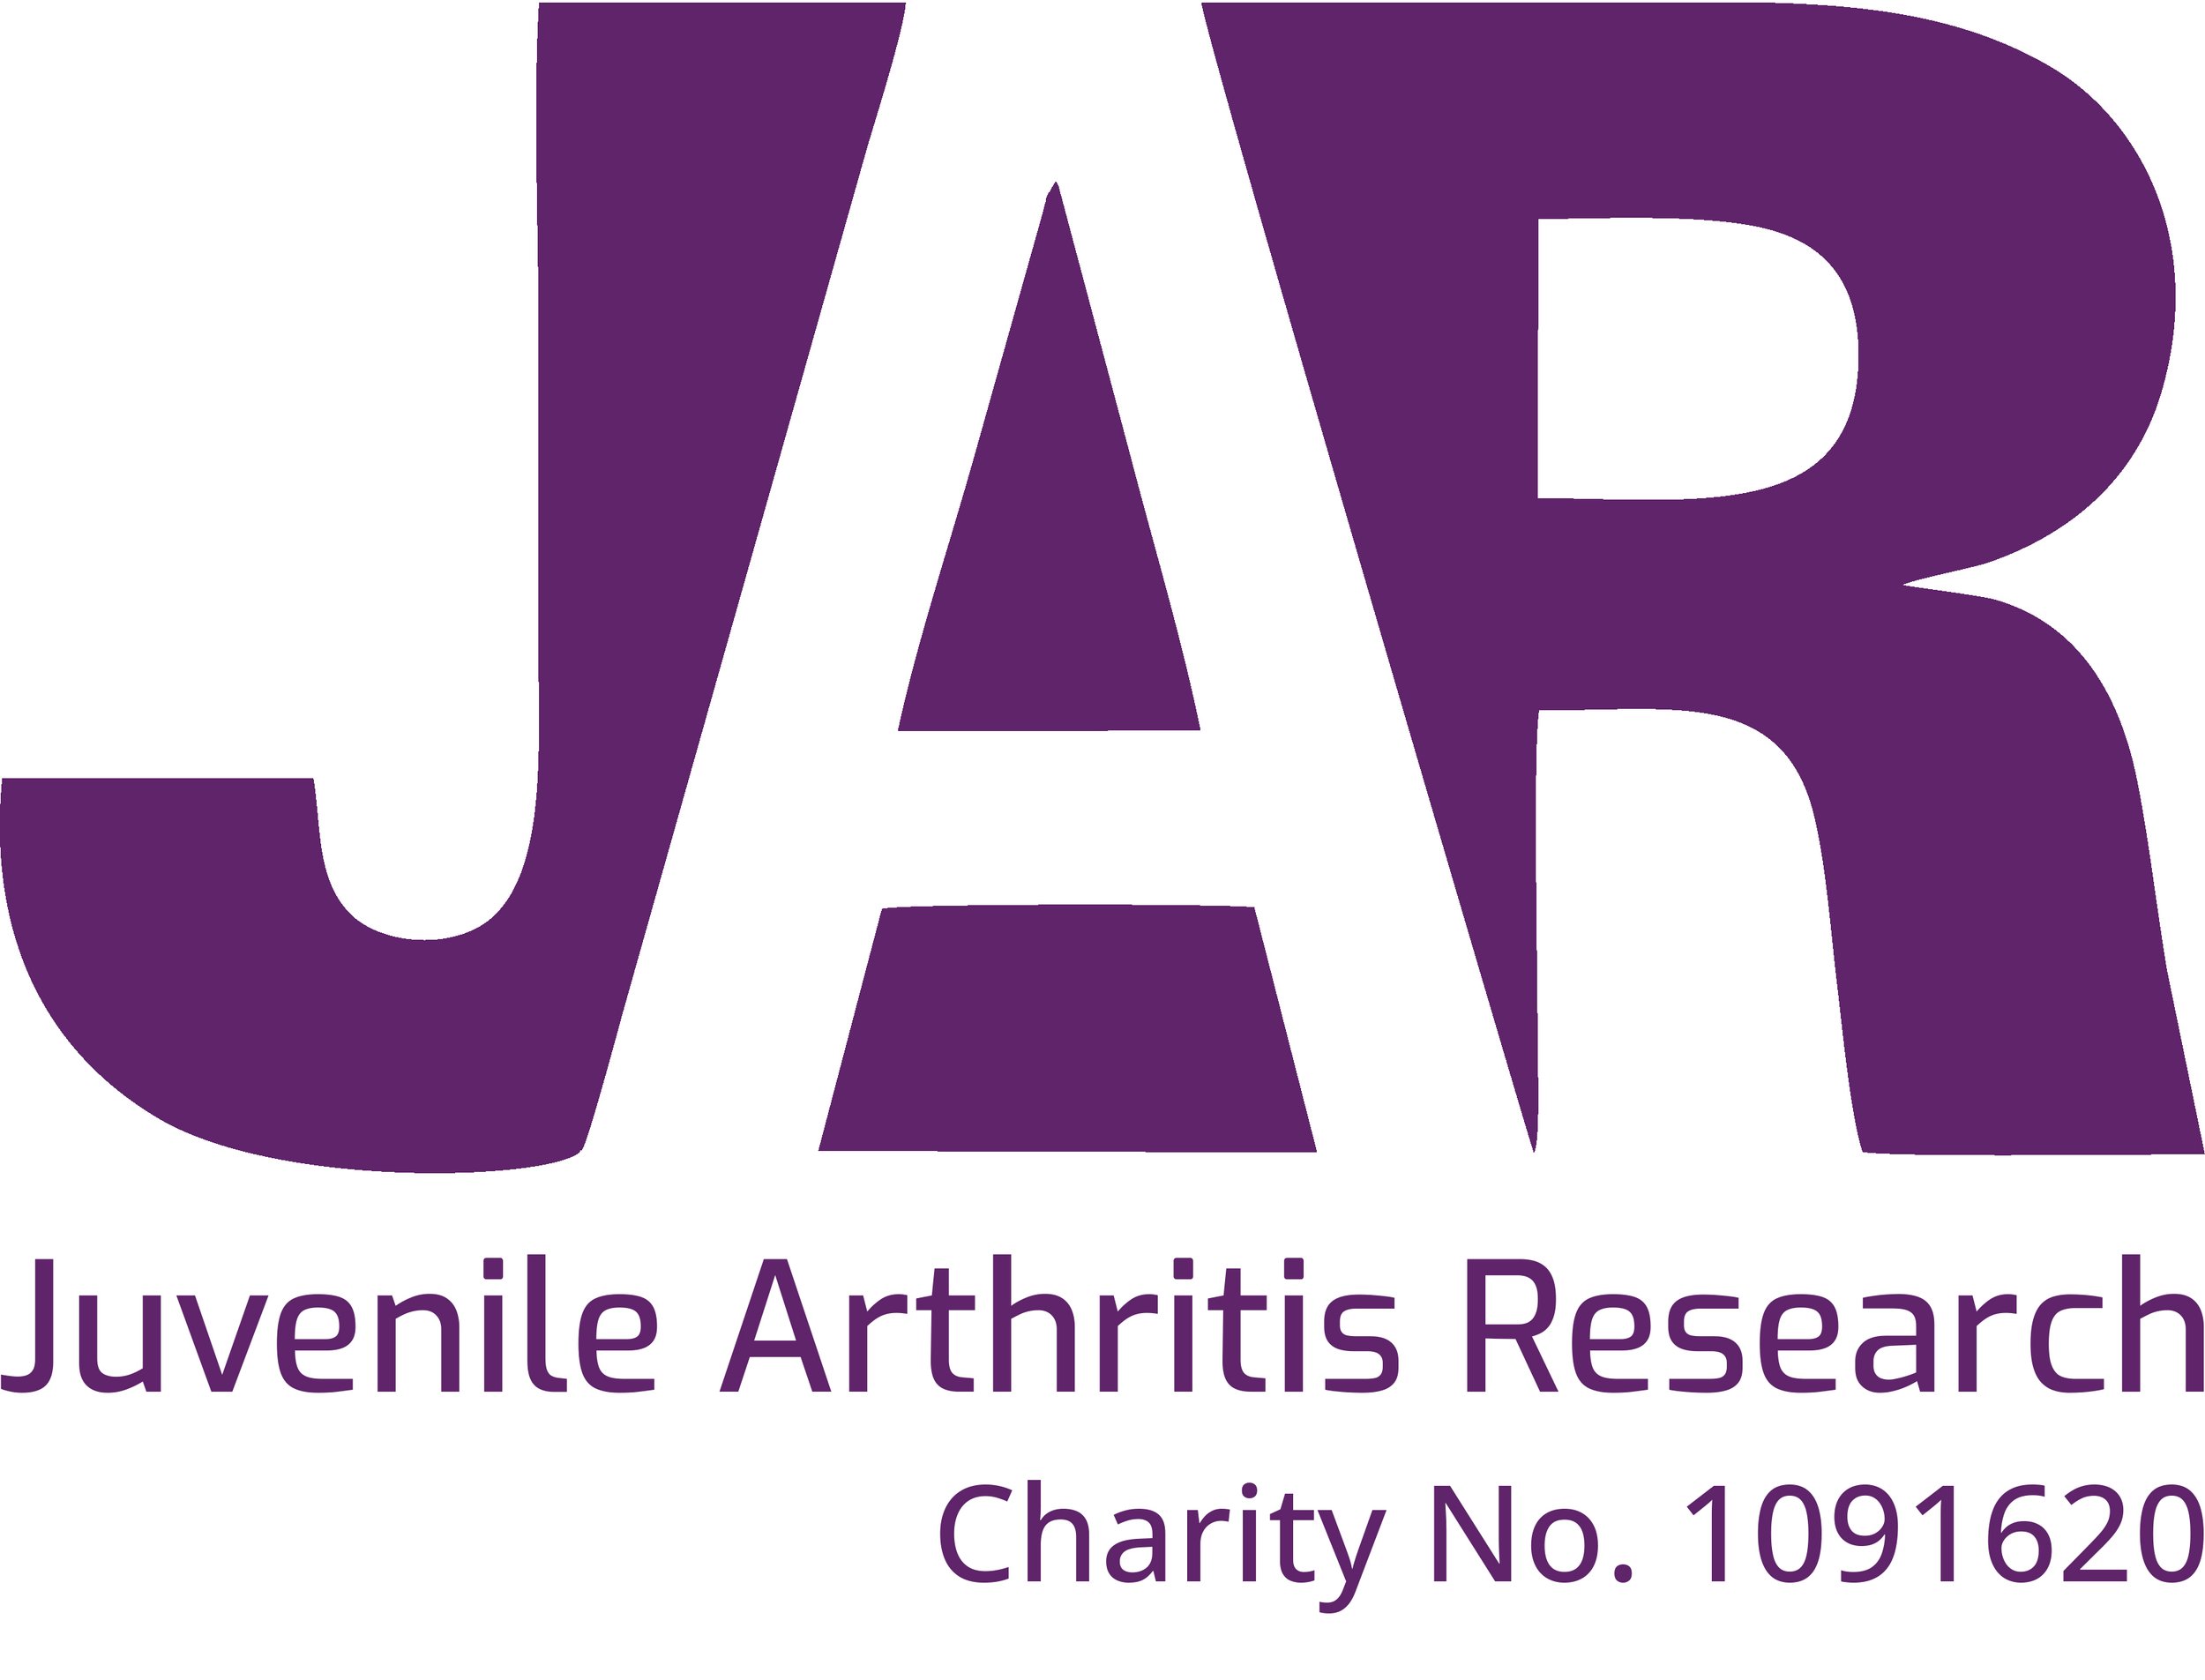 JAR_Logo_PurpleOnWhite_WithCharityNo.jpg